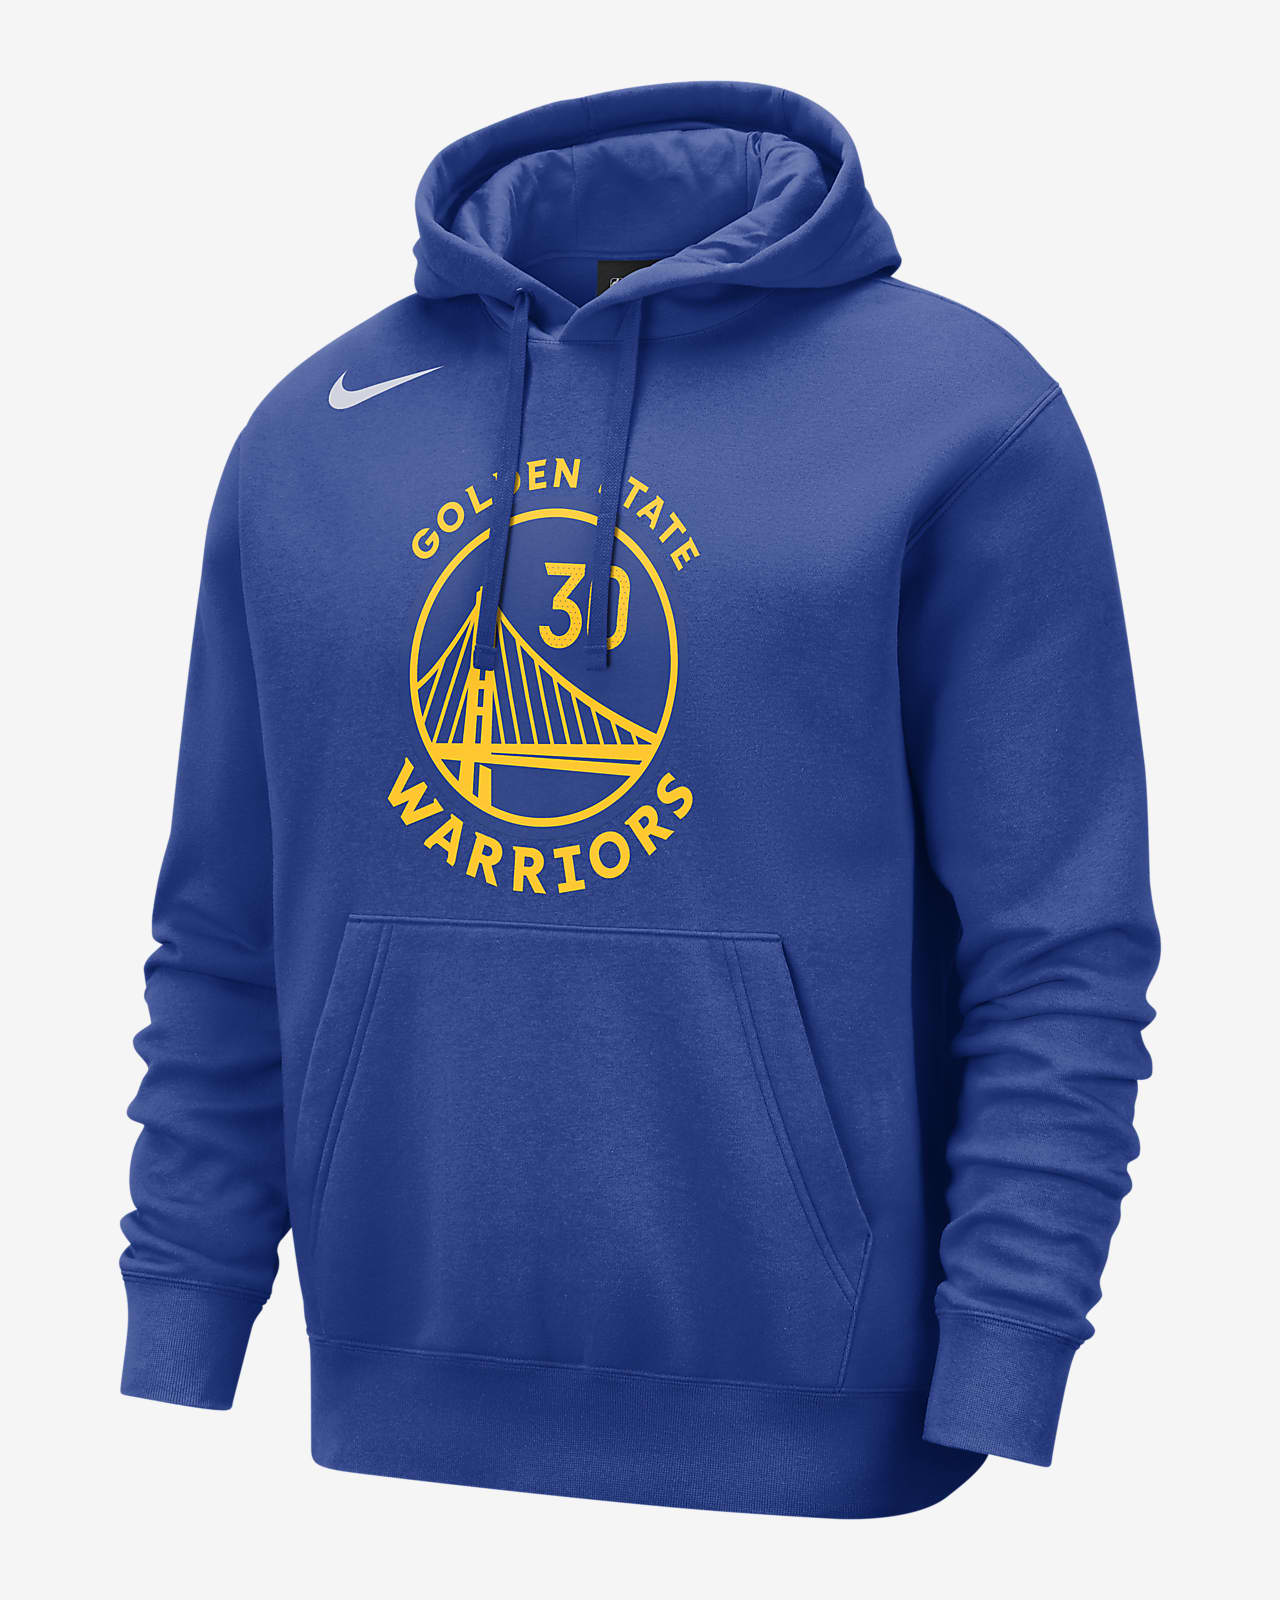 Golden State Warriors Club Sudadera con capucha Nike de la NBA - Hombre